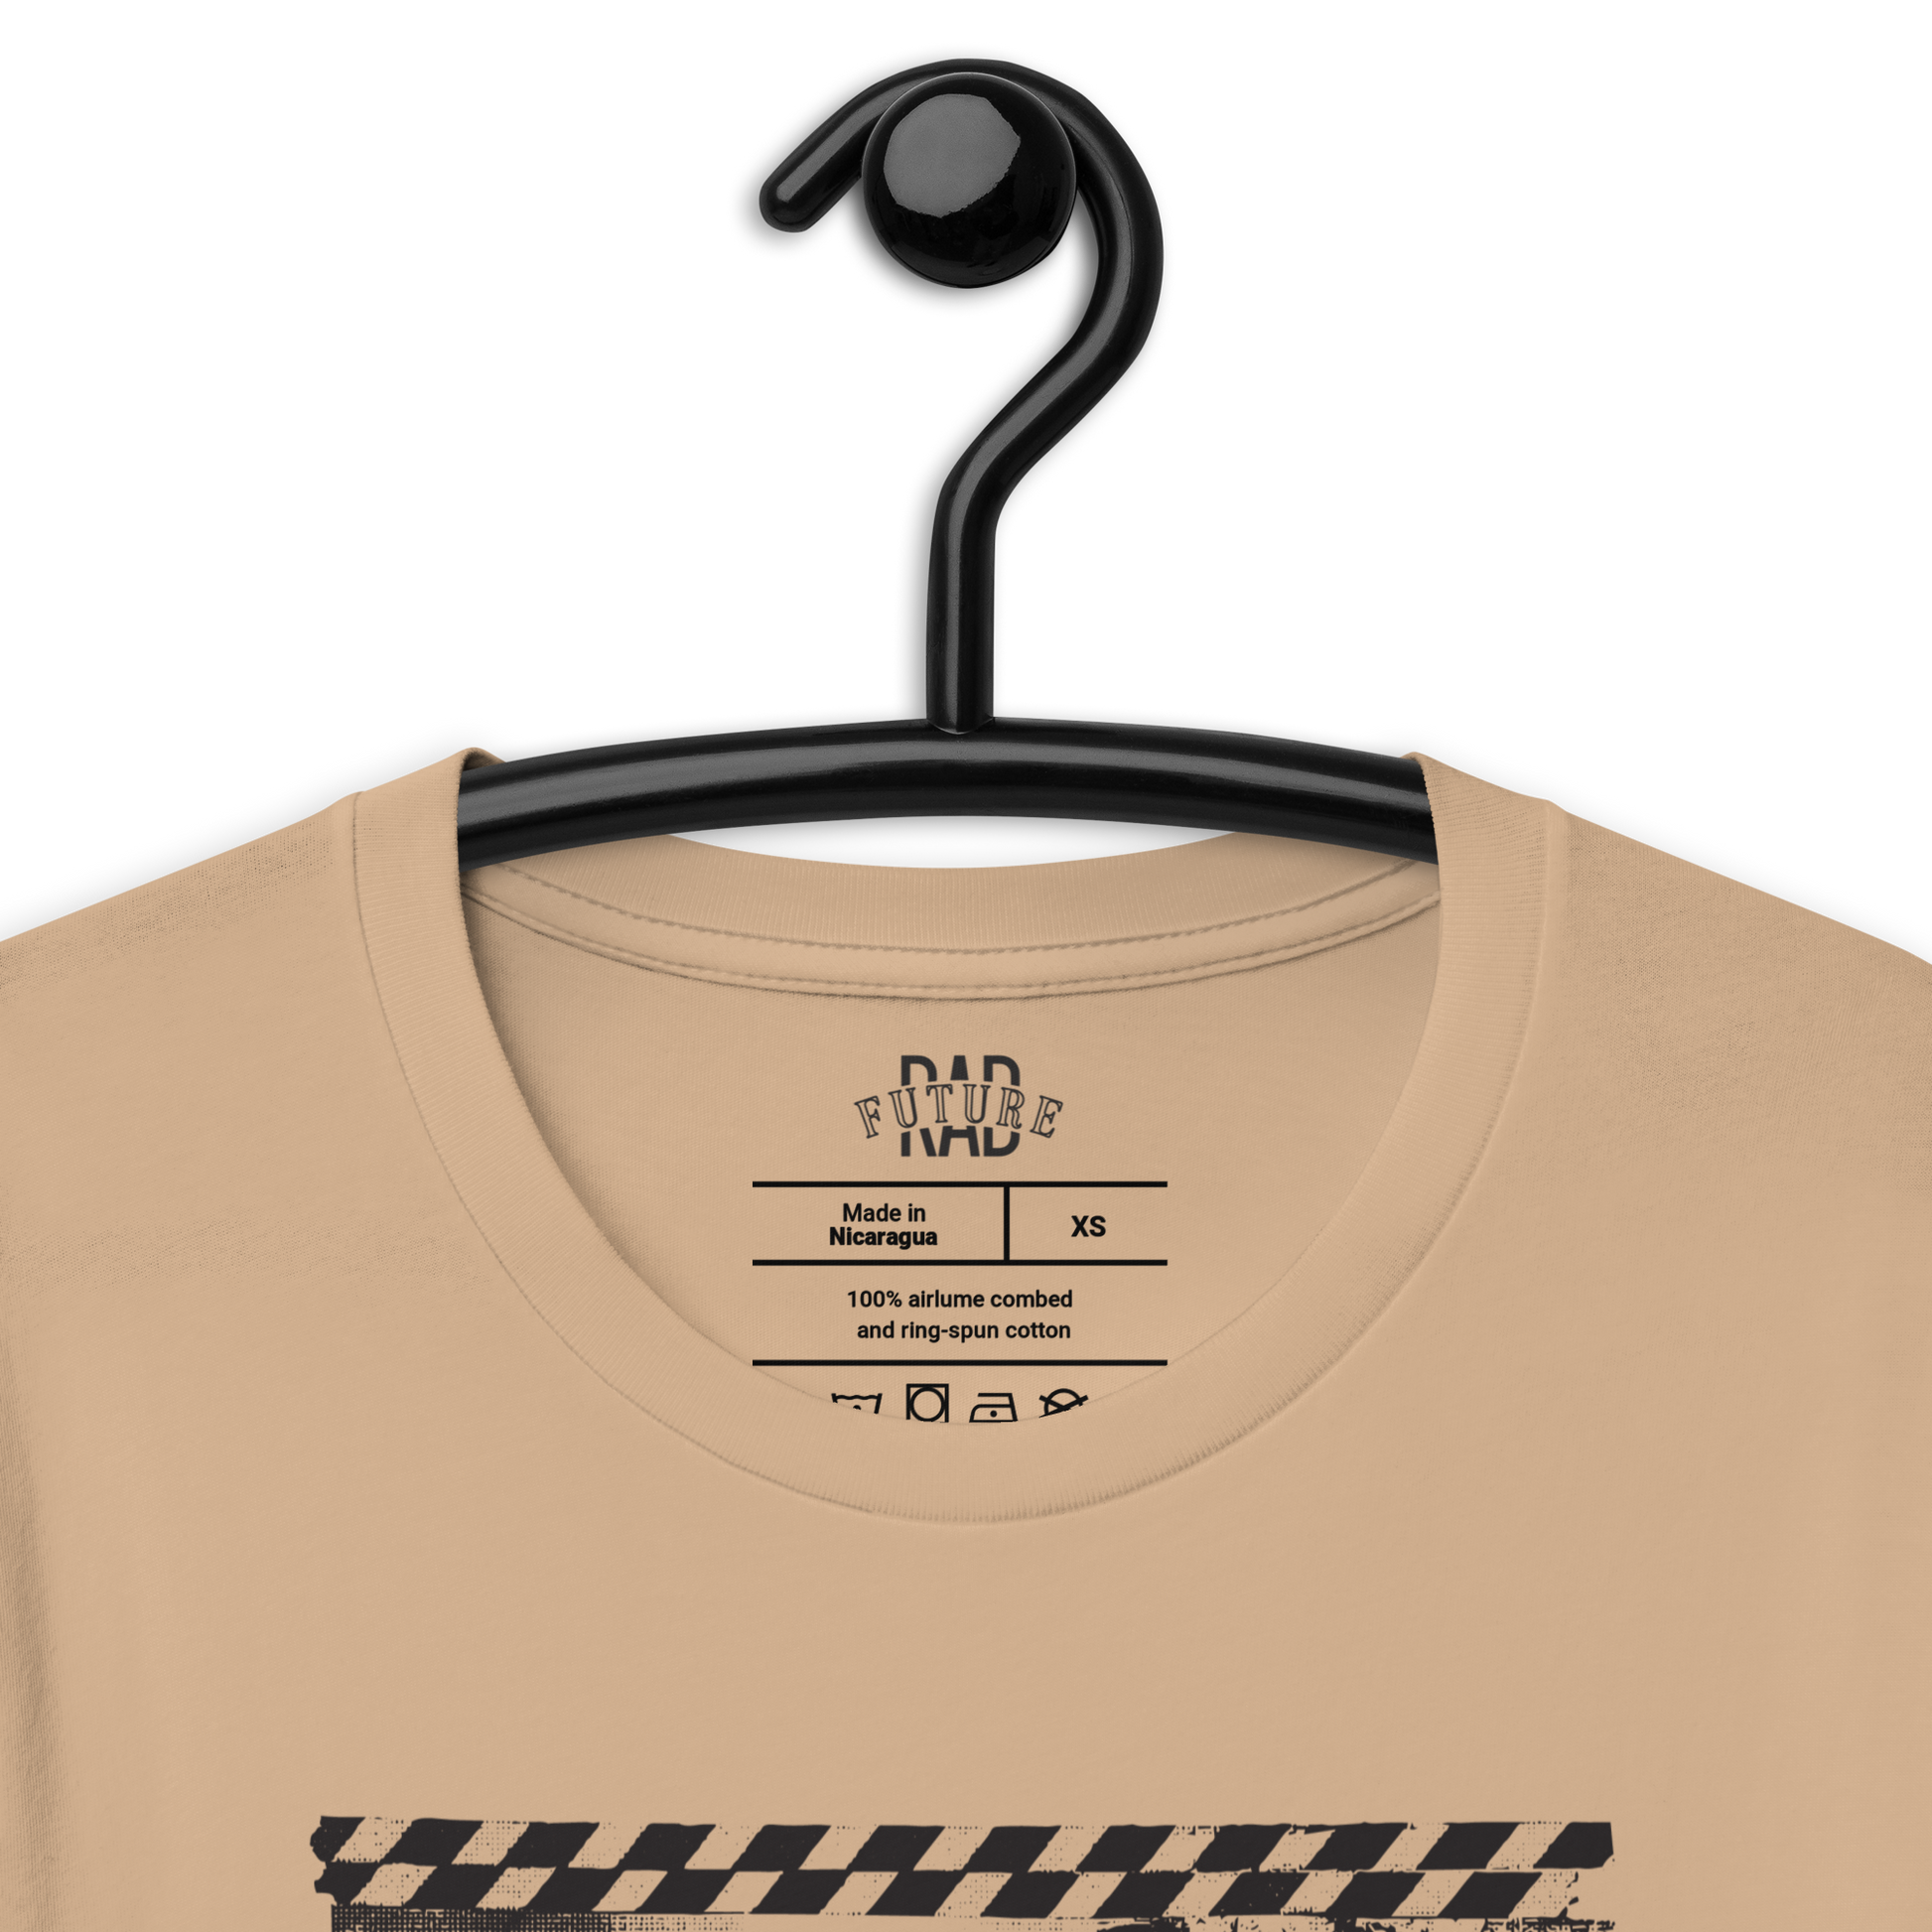 Unisex t-shirt "Do Not Bend" - Rad Future